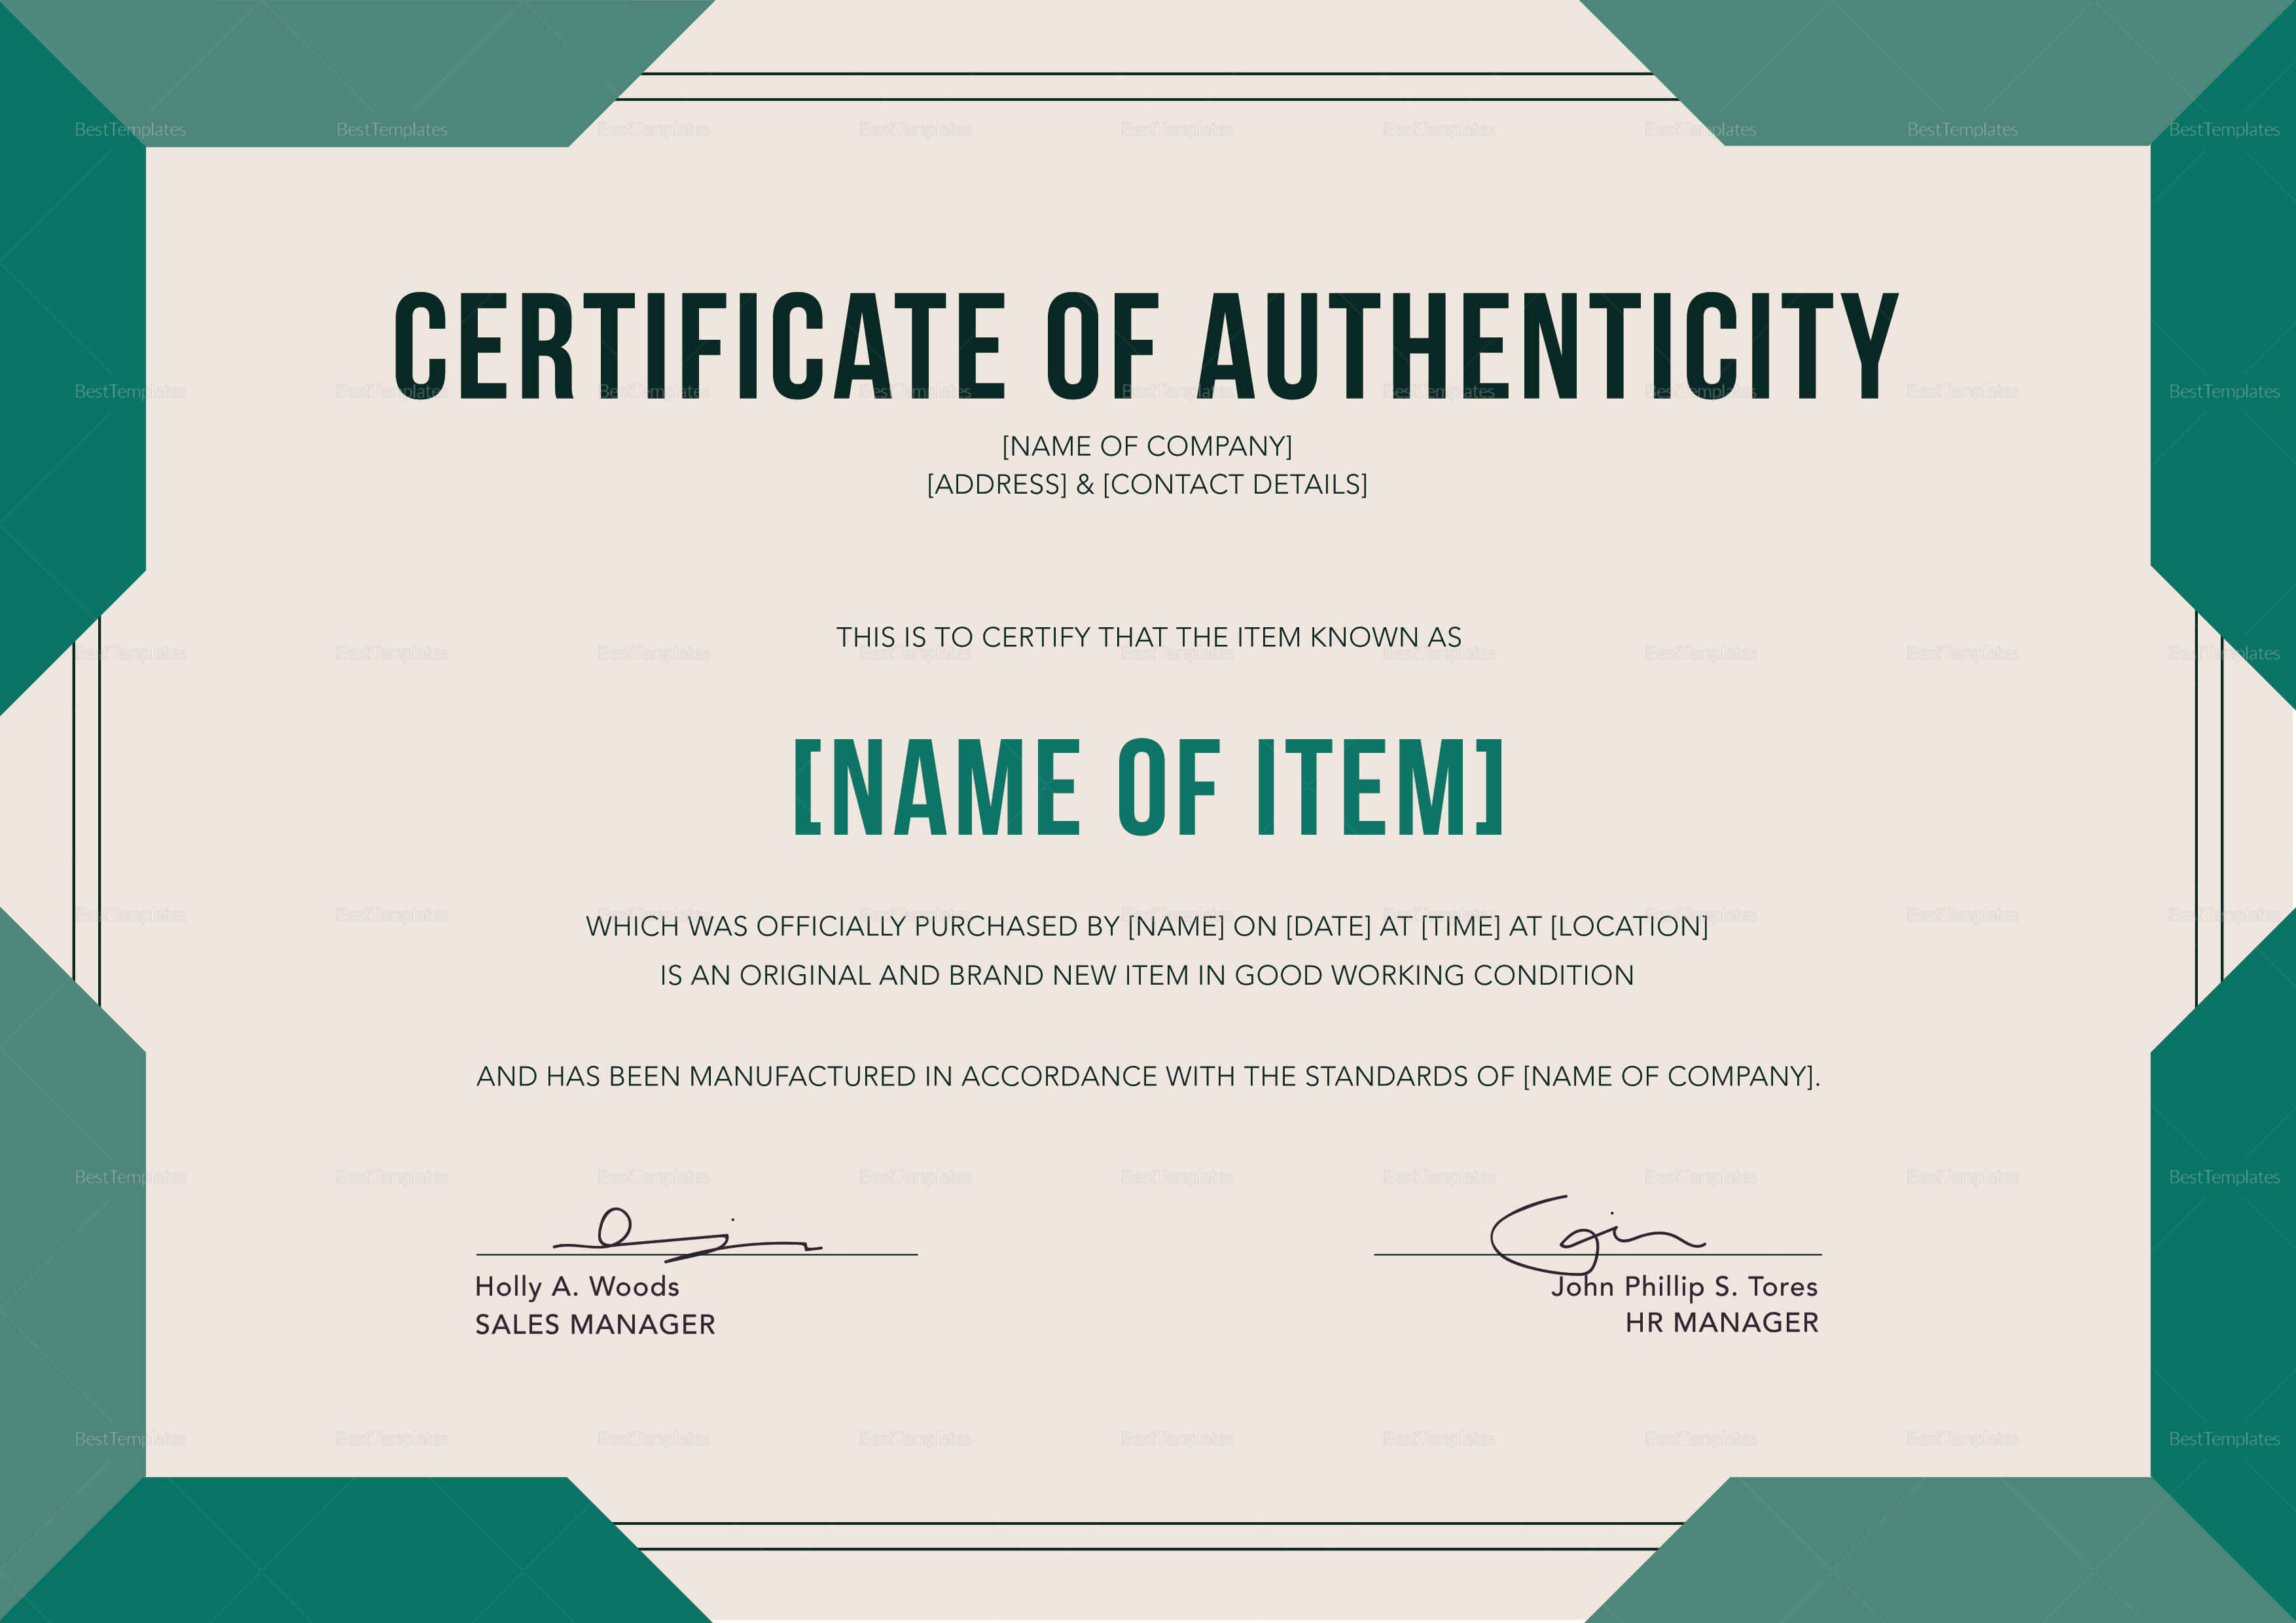 Elegant Certificate Of Authenticity Template Within Certificate Of Authenticity Template